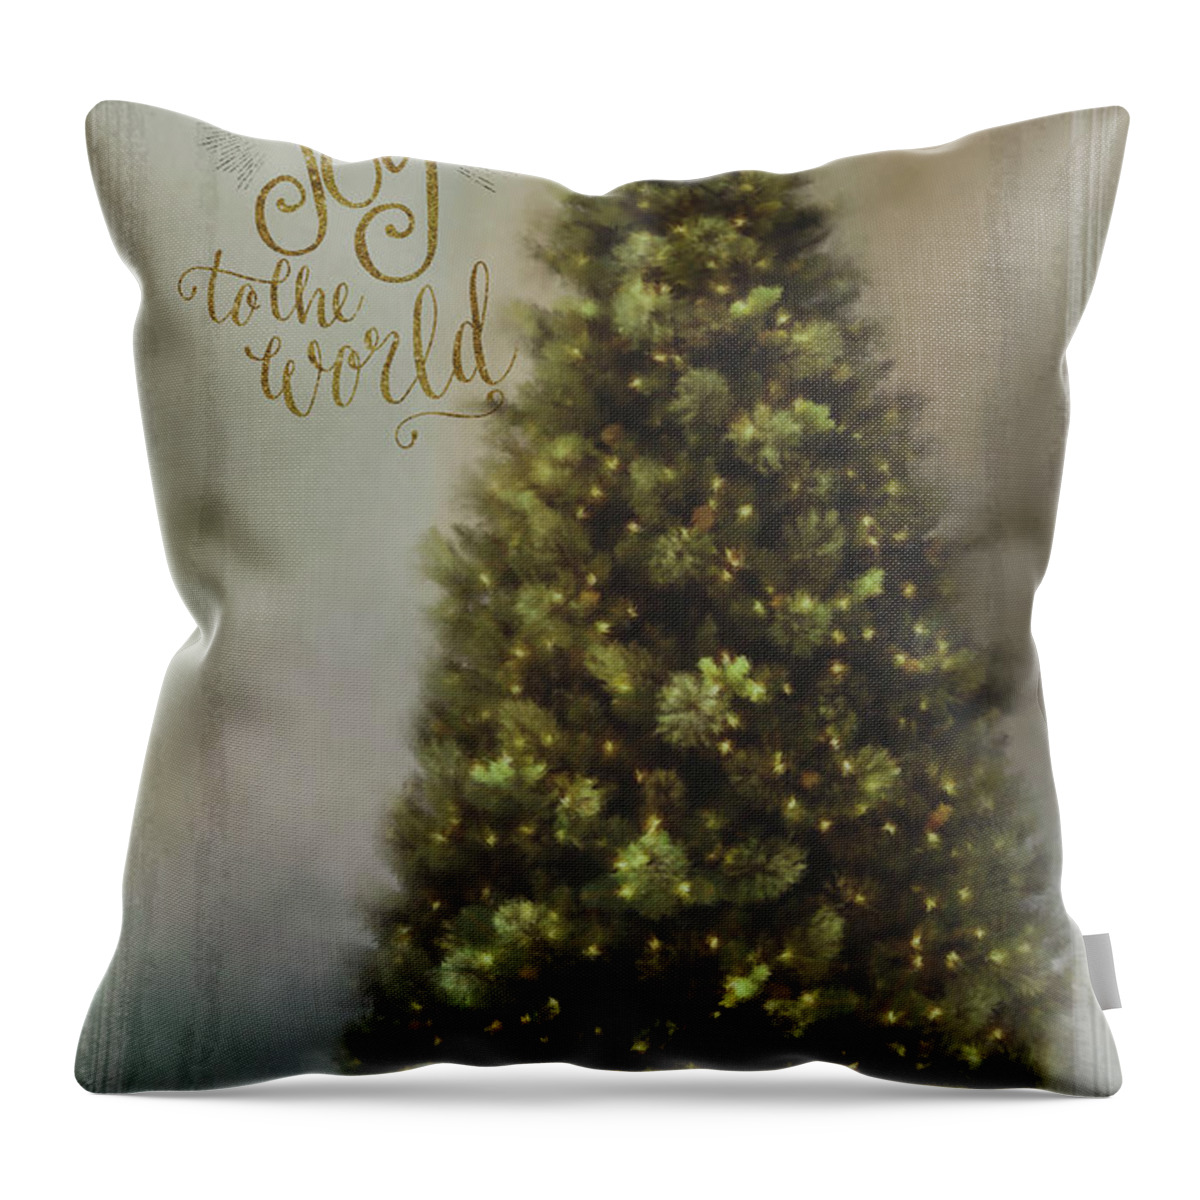 Seasonal Throw Pillow featuring the photograph Joy to the World by Teresa Wilson